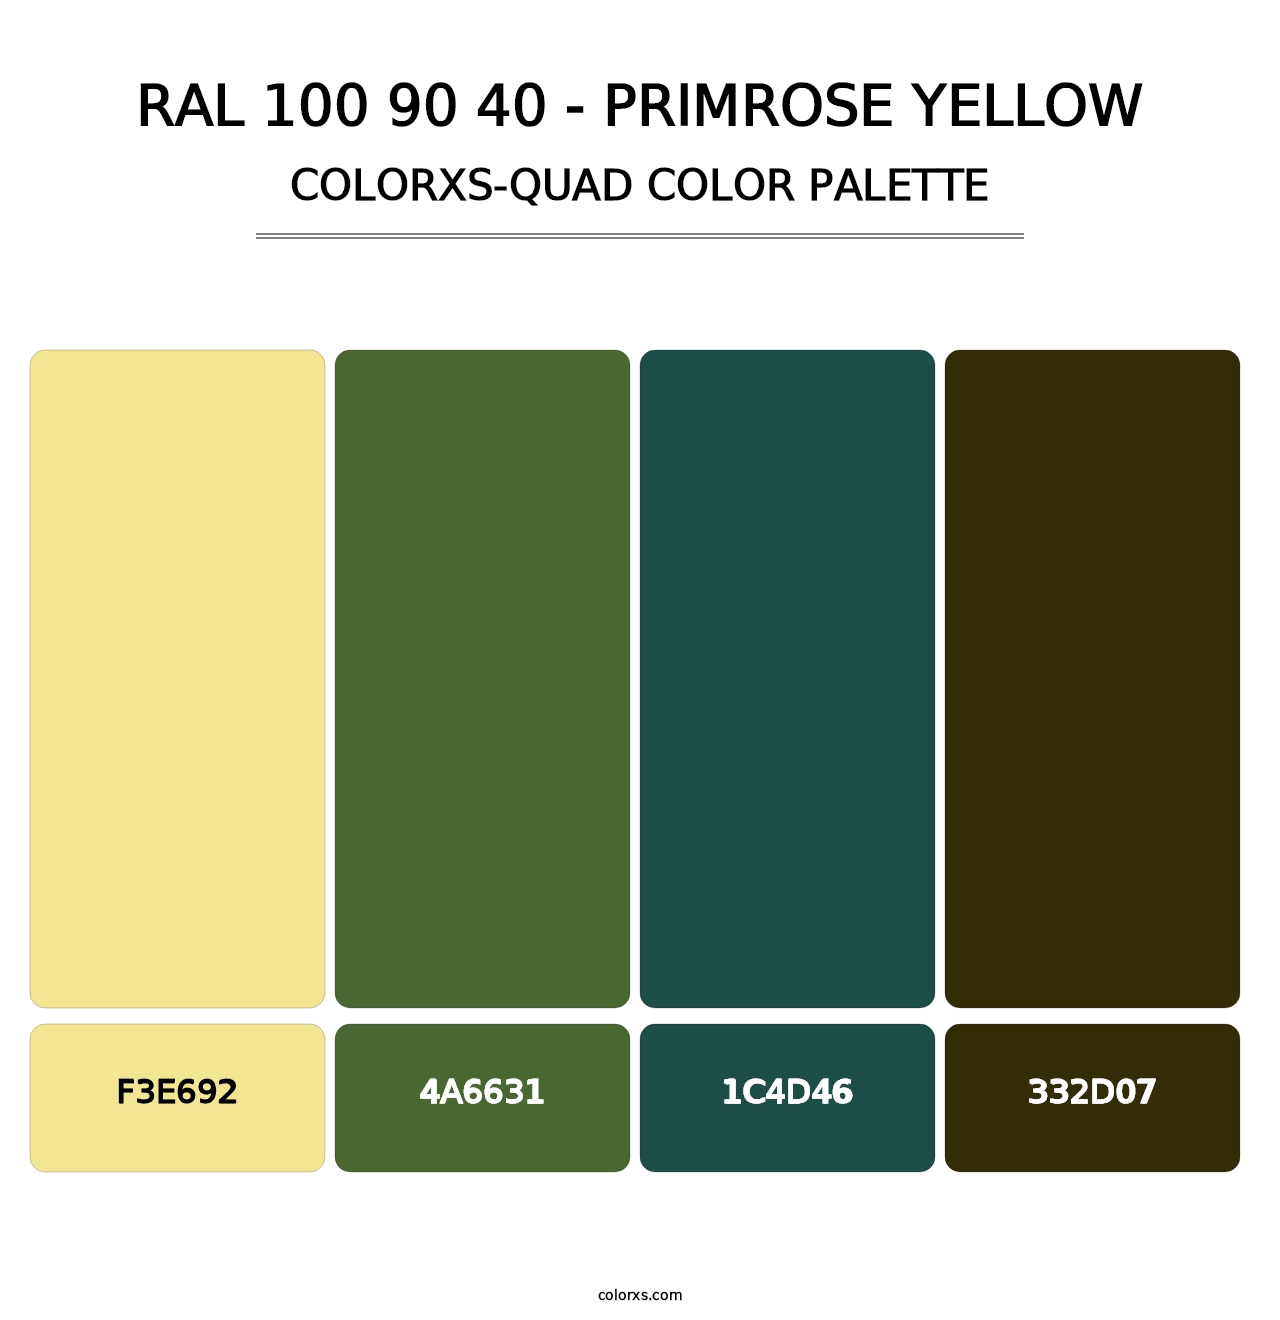 RAL 100 90 40 - Primrose Yellow - Colorxs Quad Palette